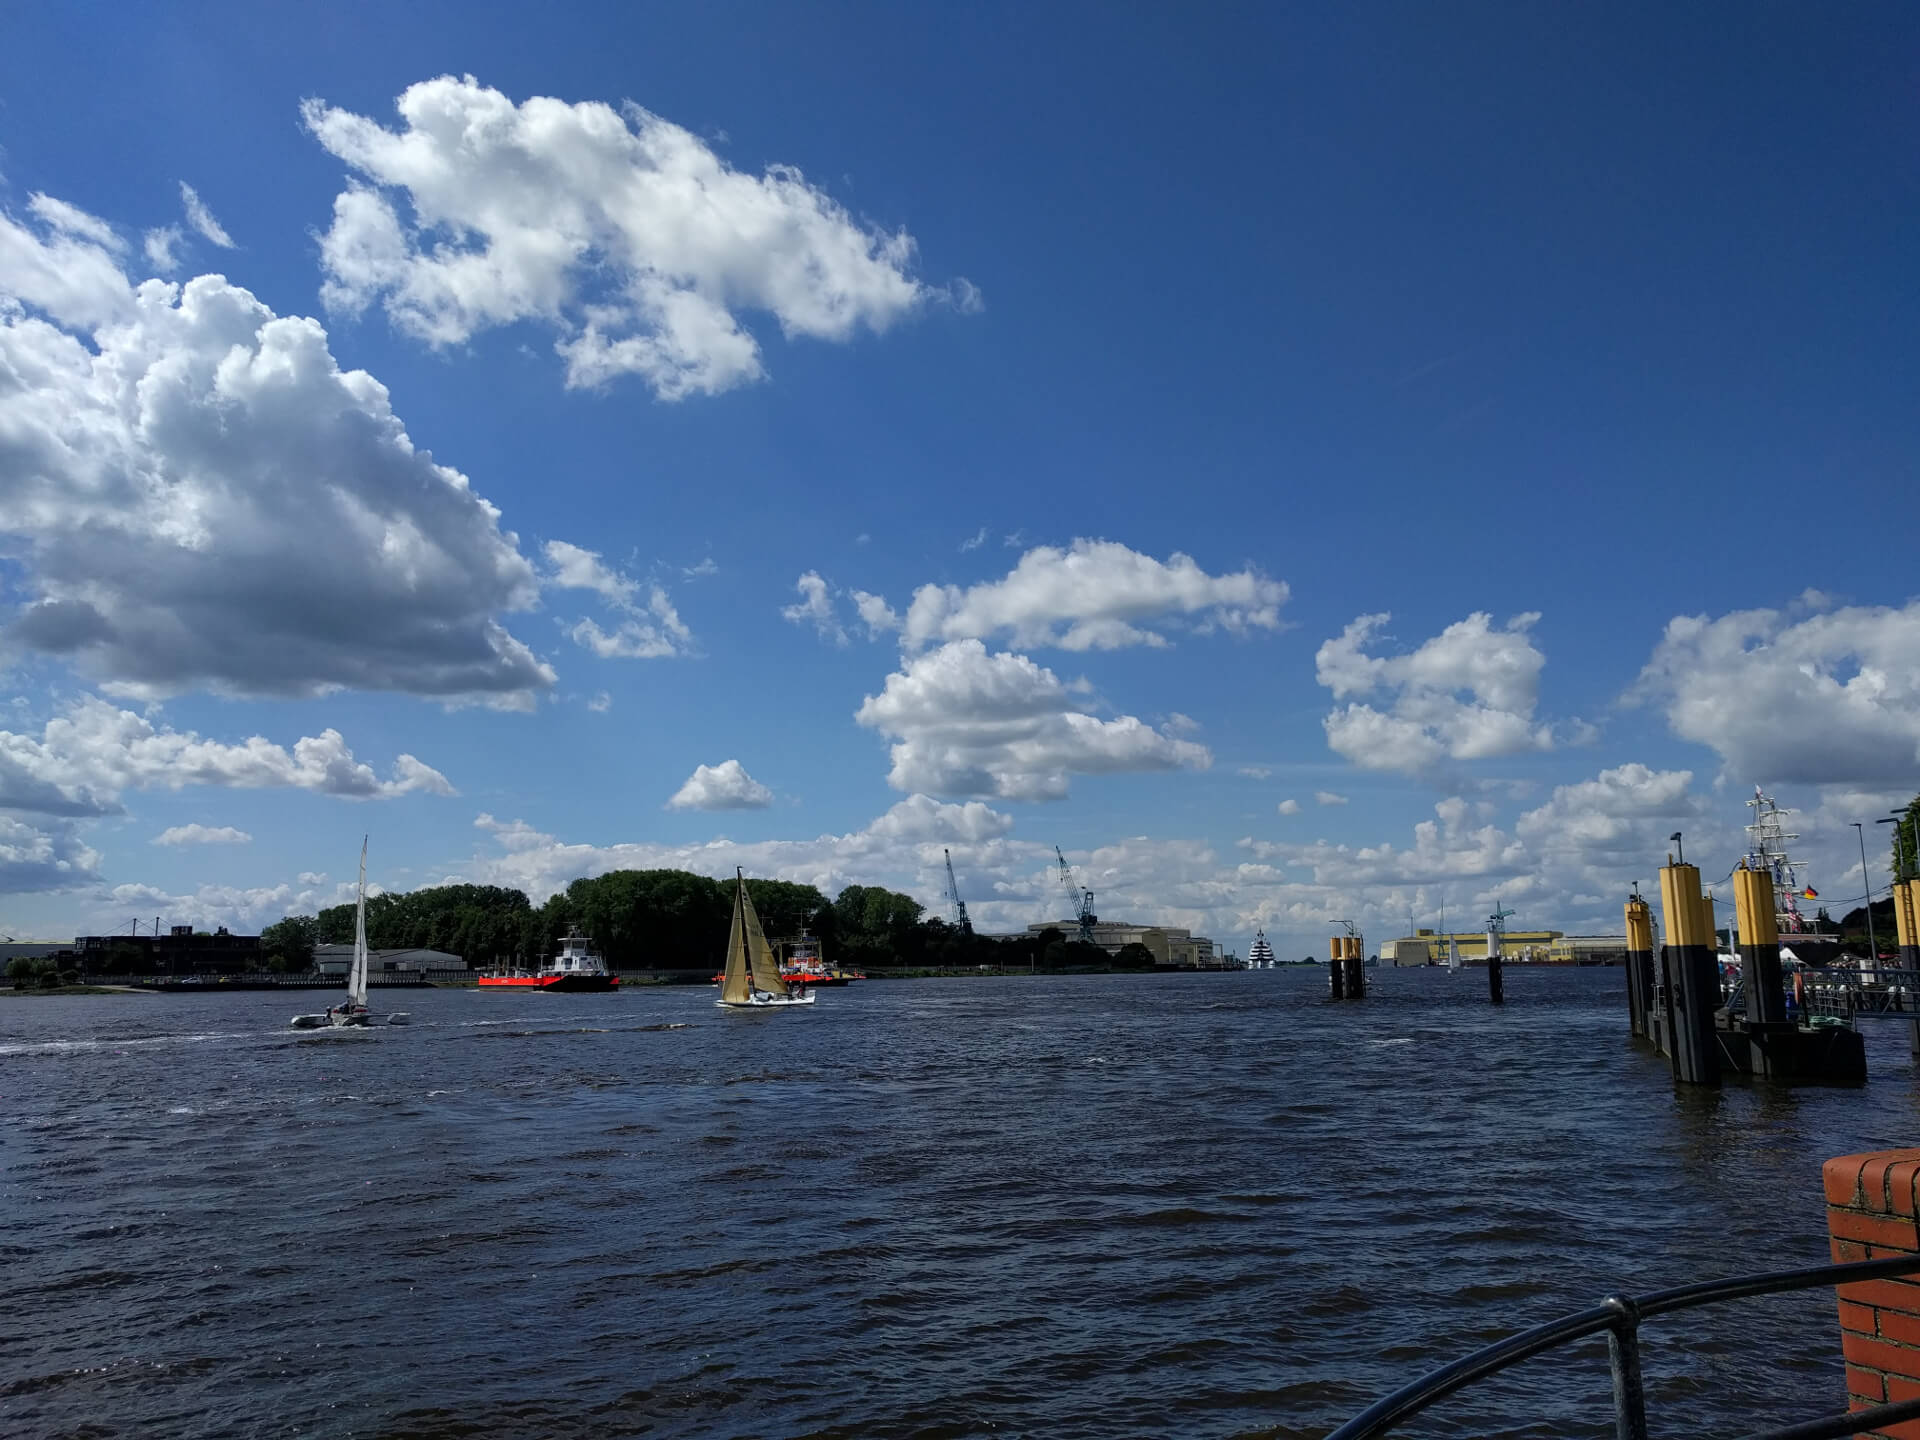 Sailing ships on the River Weser in Bremen-Vegesack